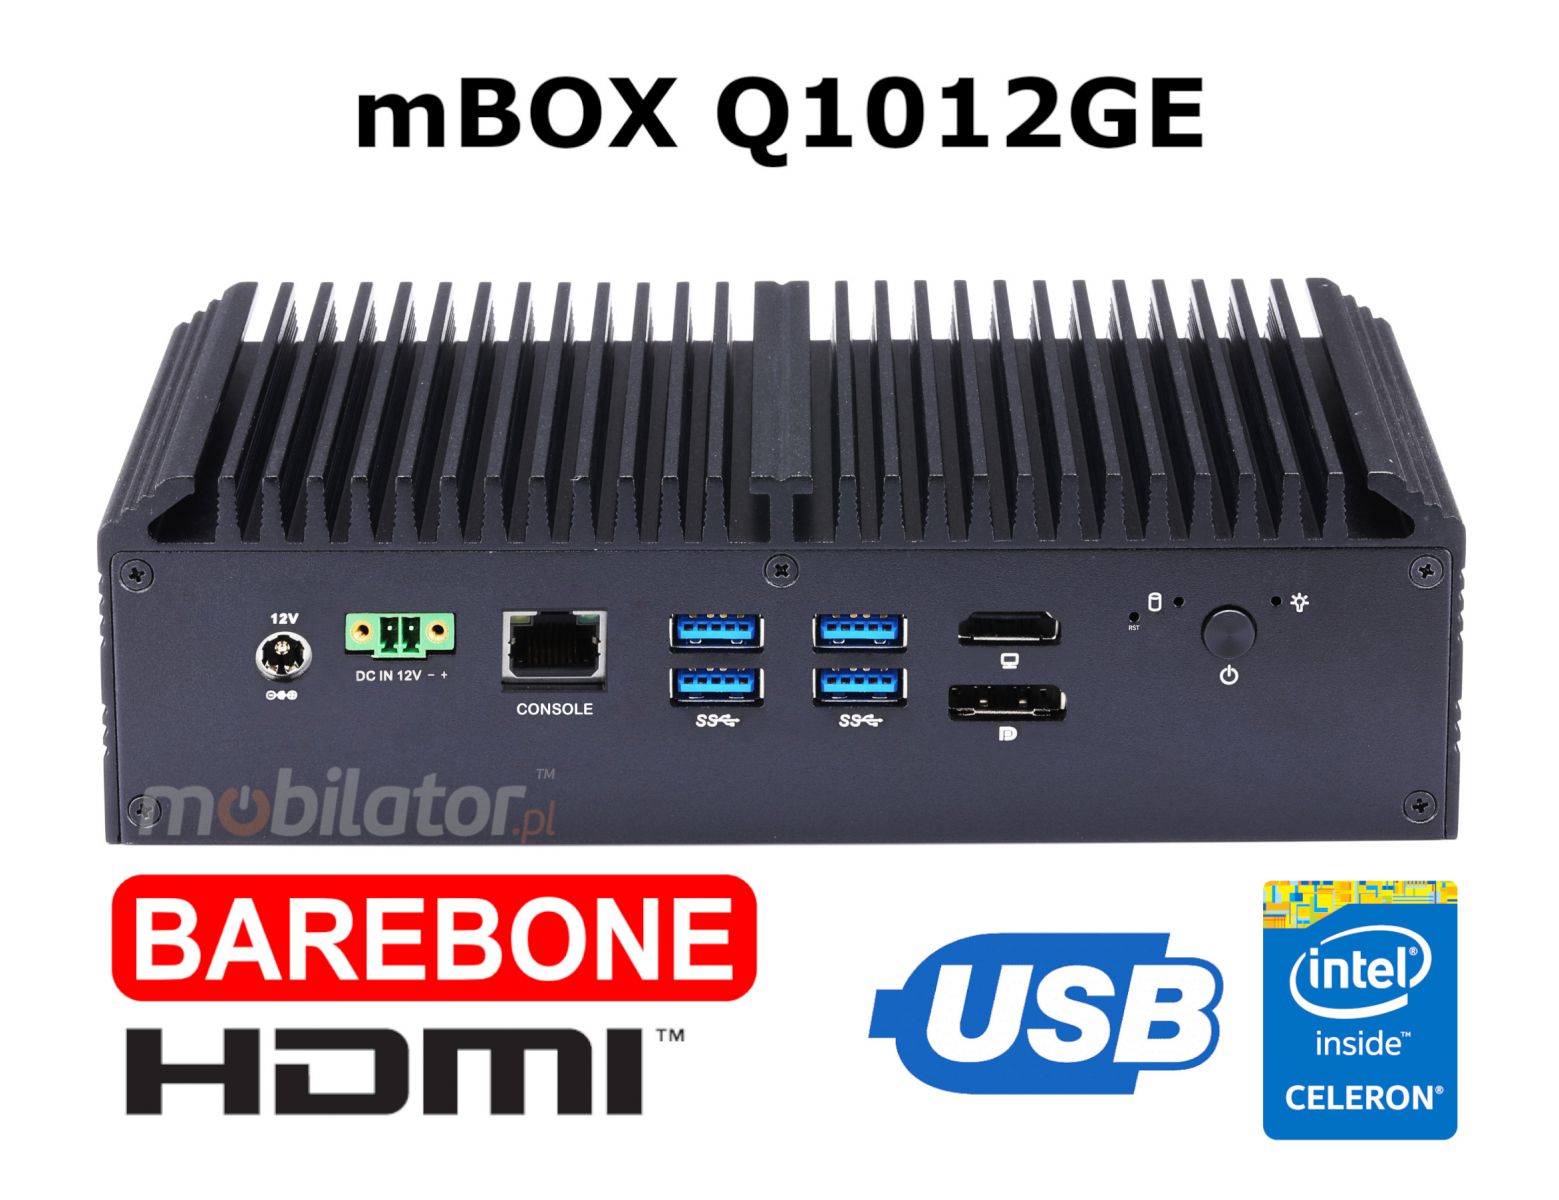 mBOX Q1012GE Barebone version 1, HDMI, intel Celeron